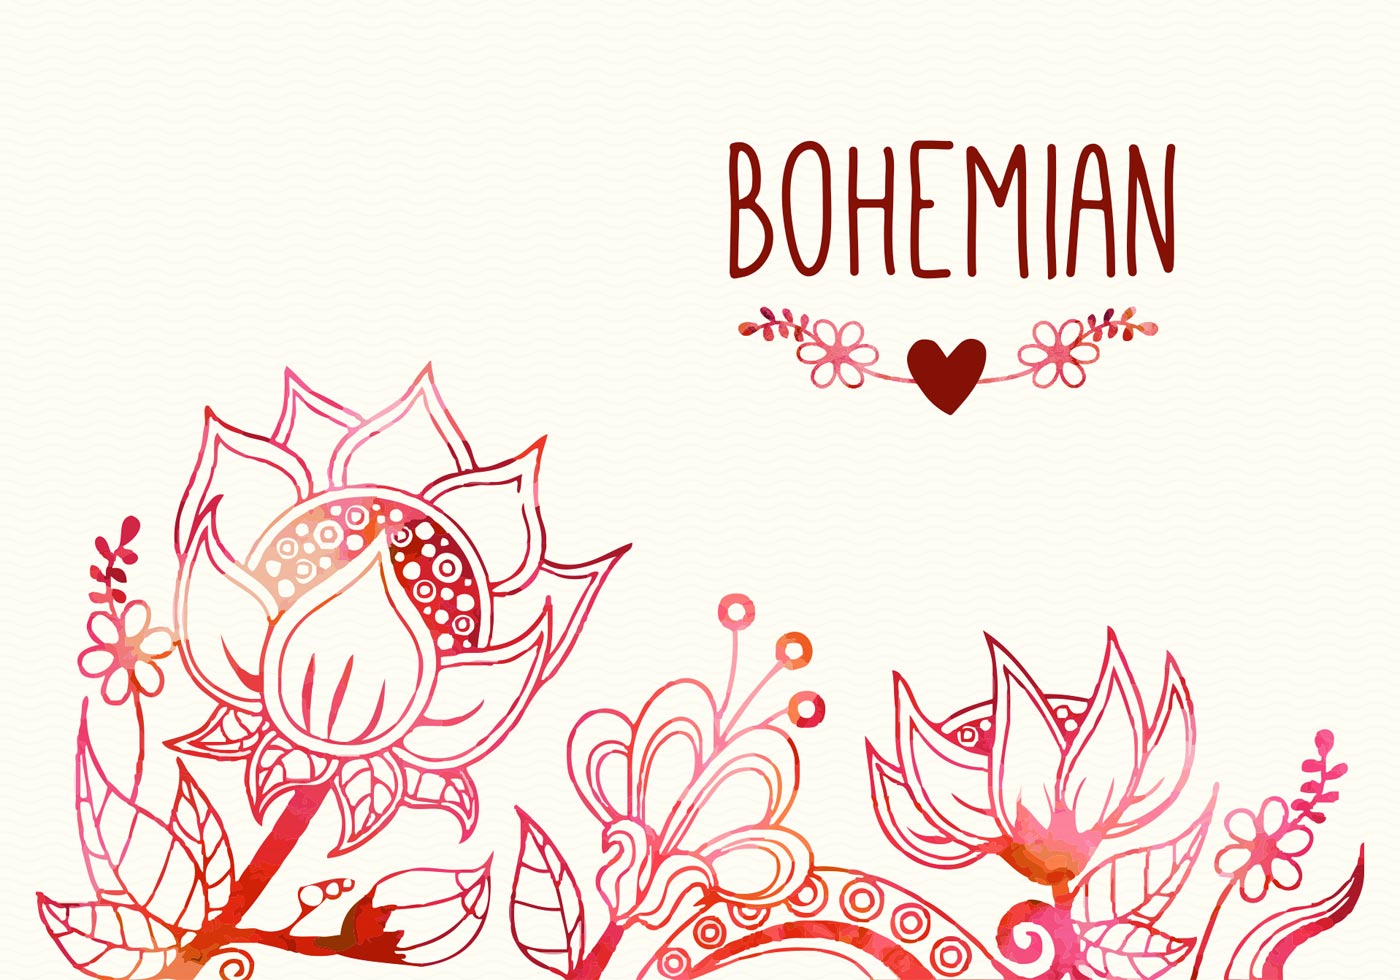 Free Bohemian Flourish Vector Illustration - Download Free Vector Art